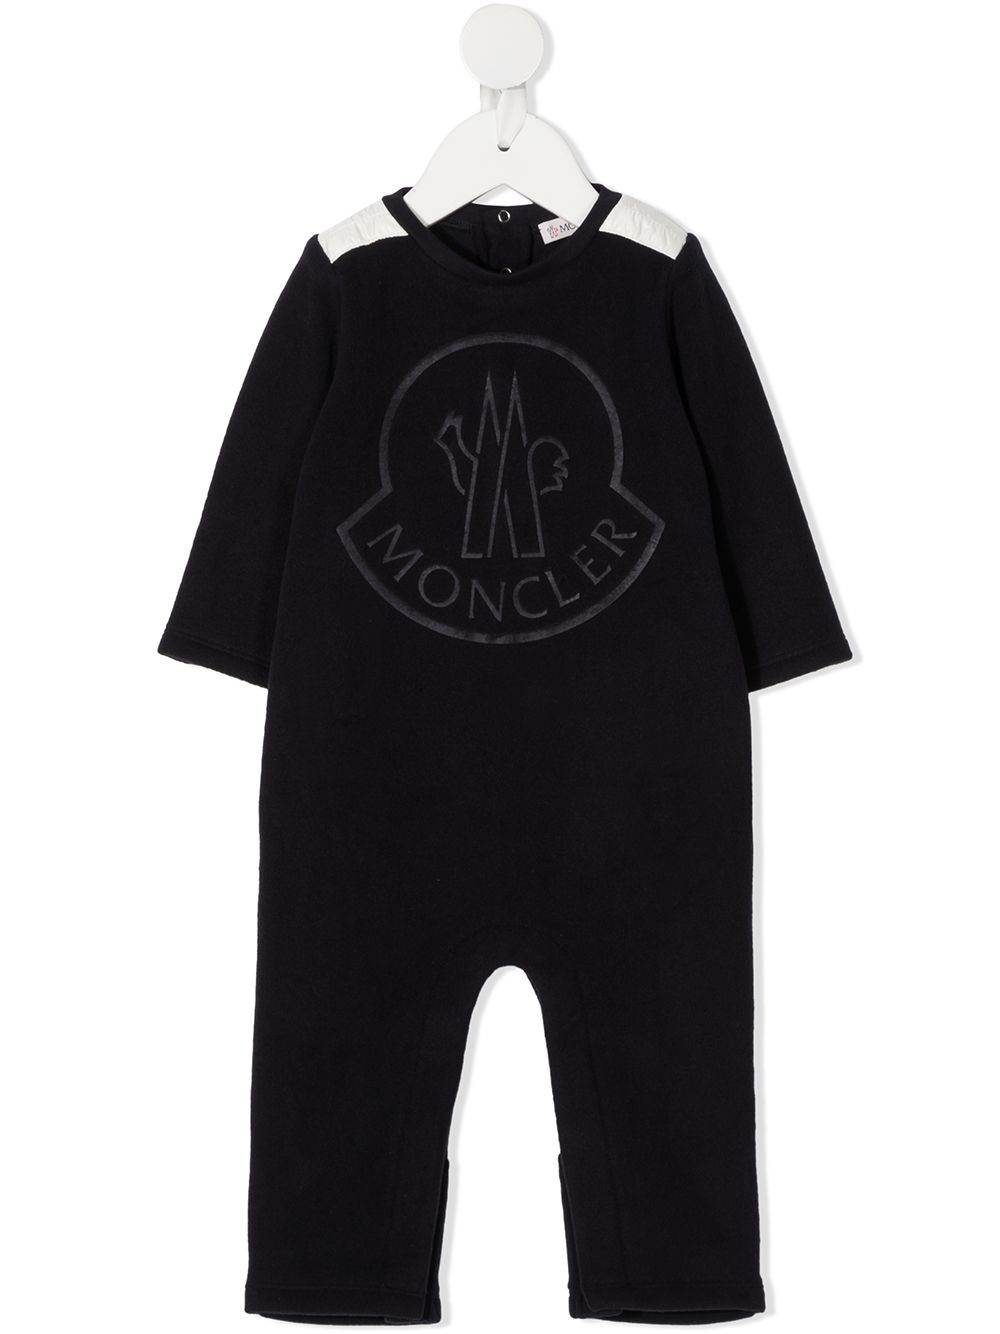 Black baby onesie with logo